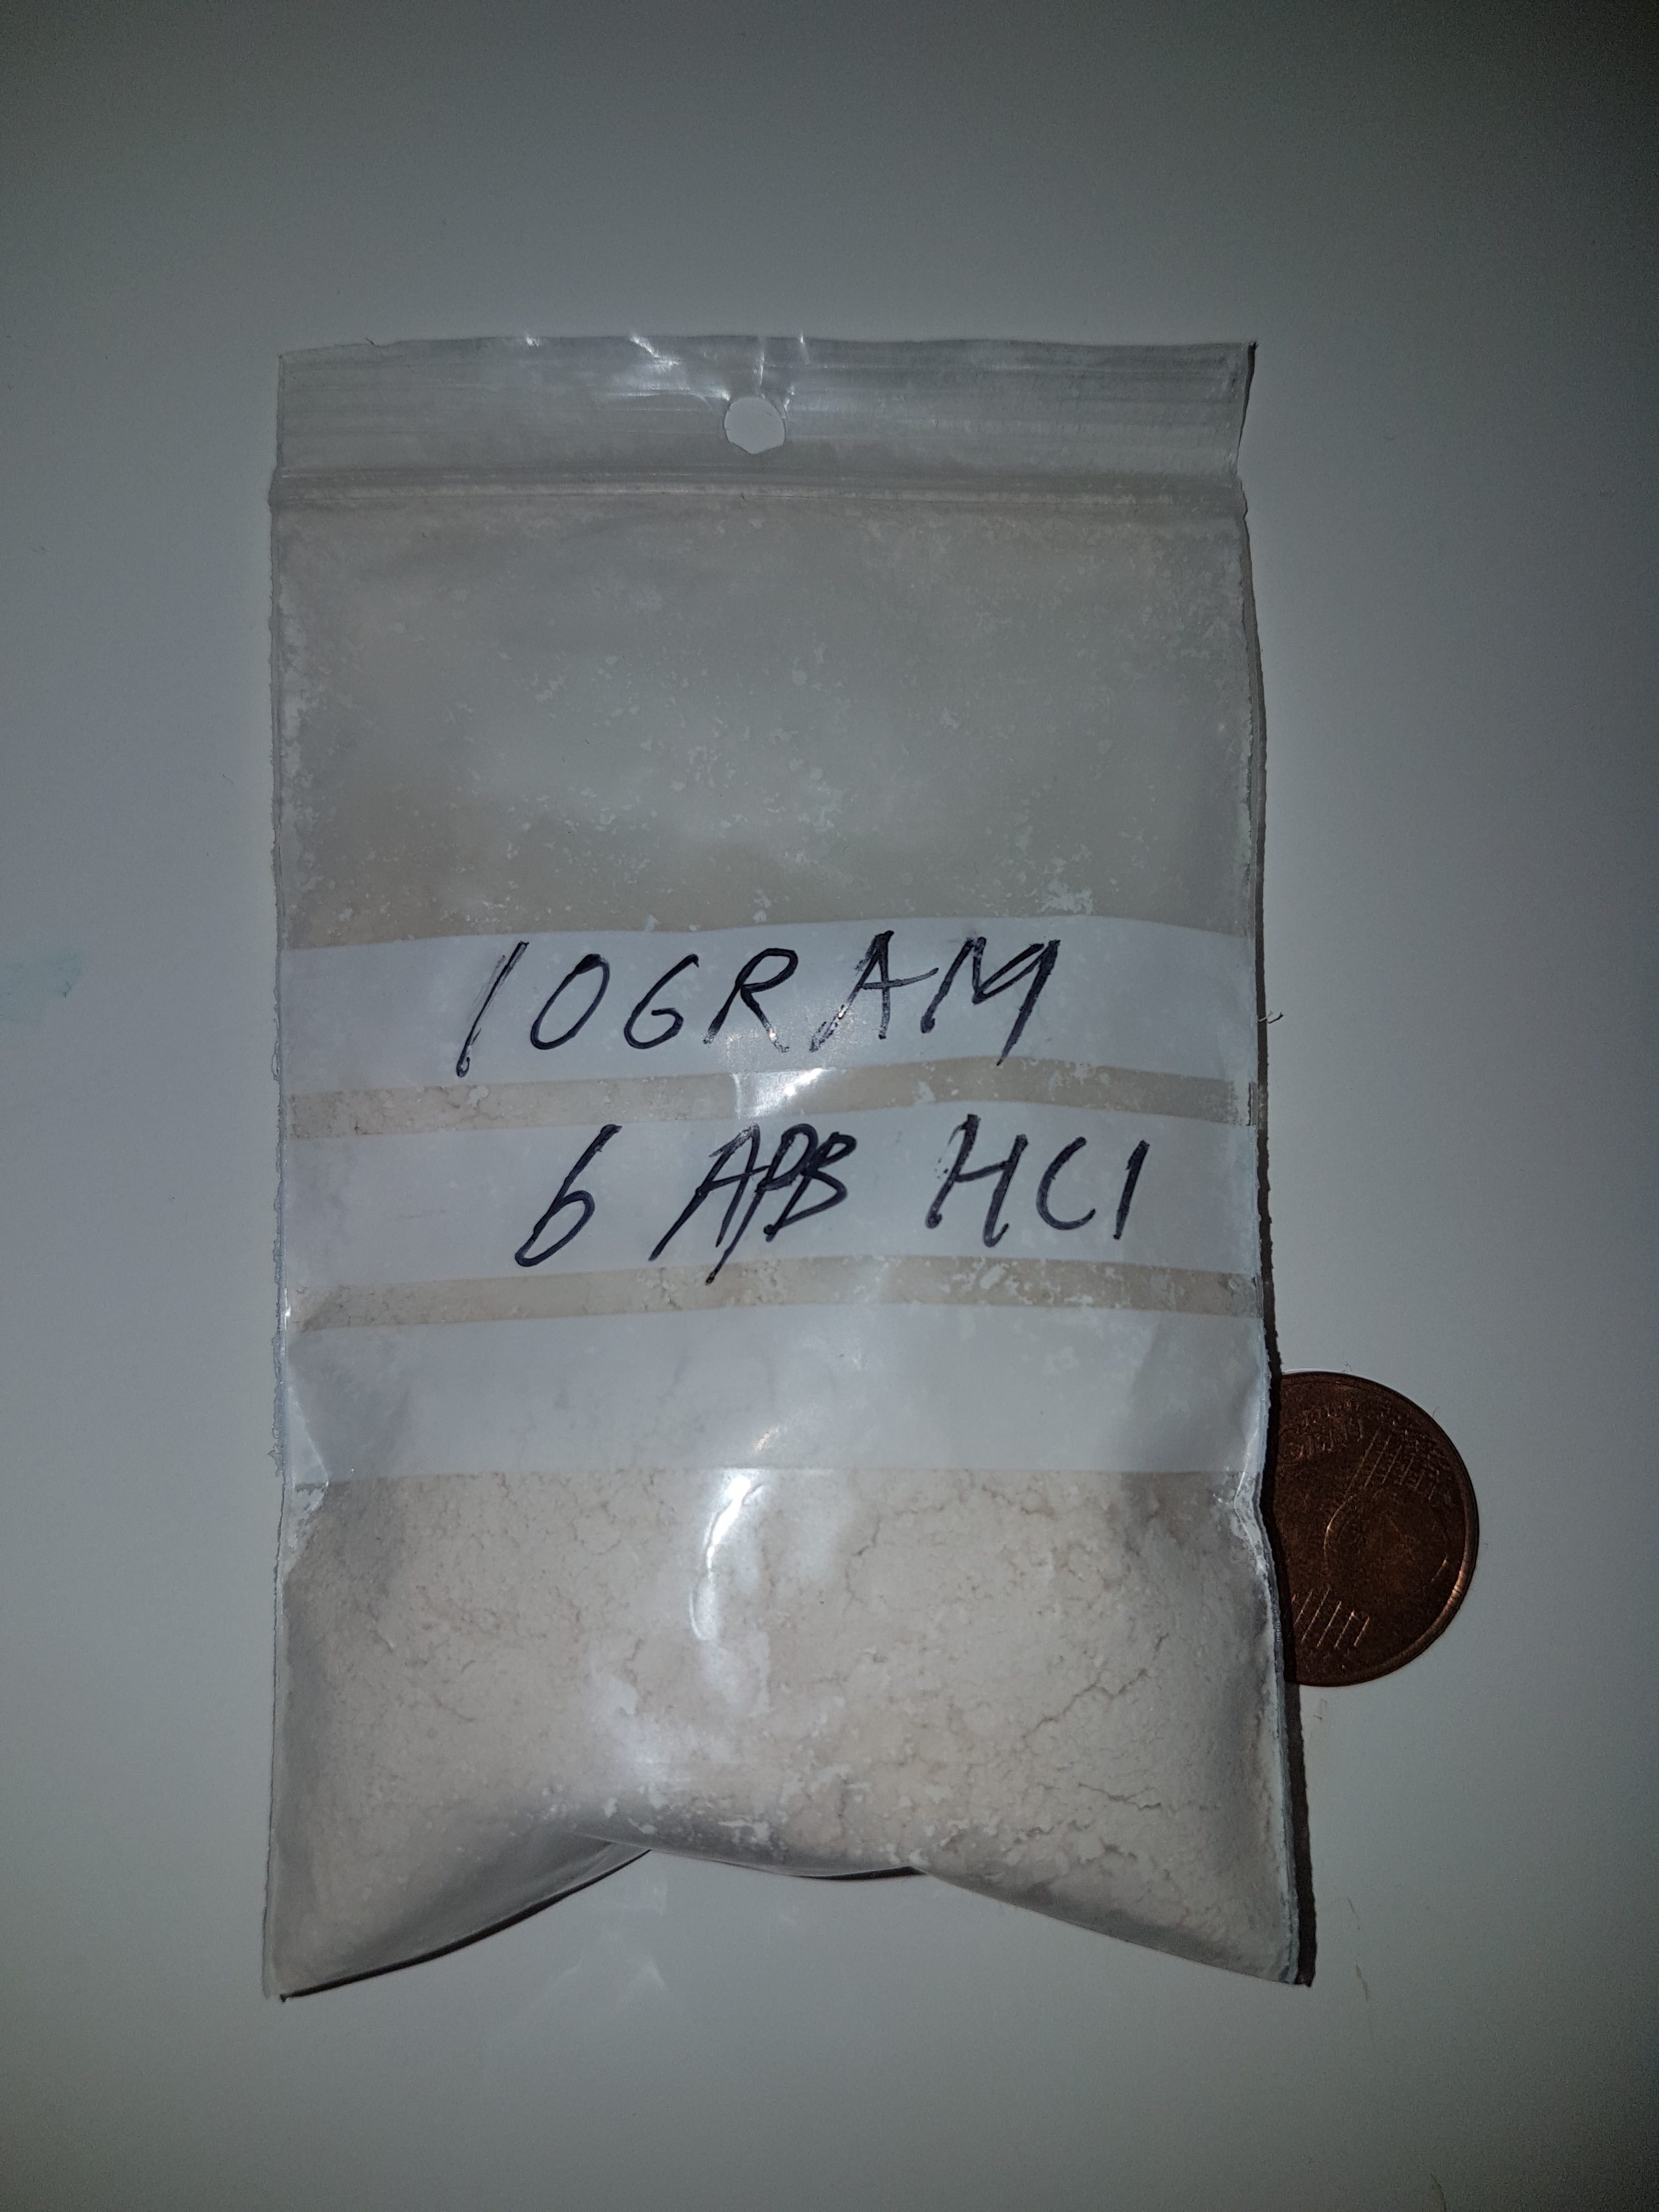 6-apb HCI x 10 gram